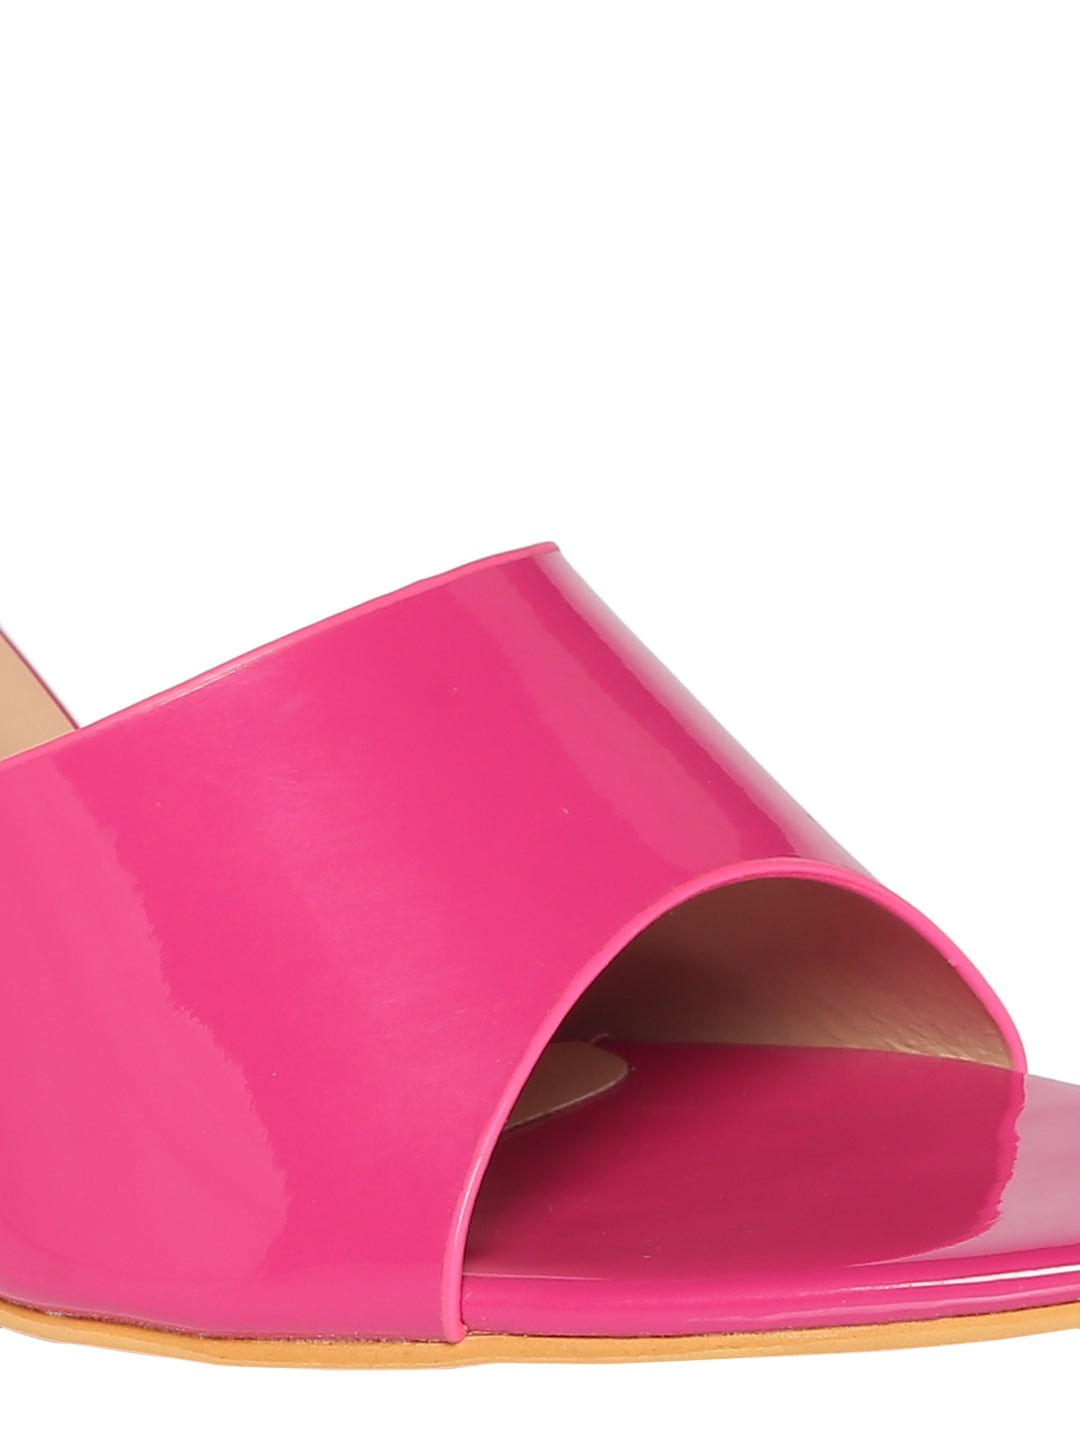 Blushy Pink Block Heels